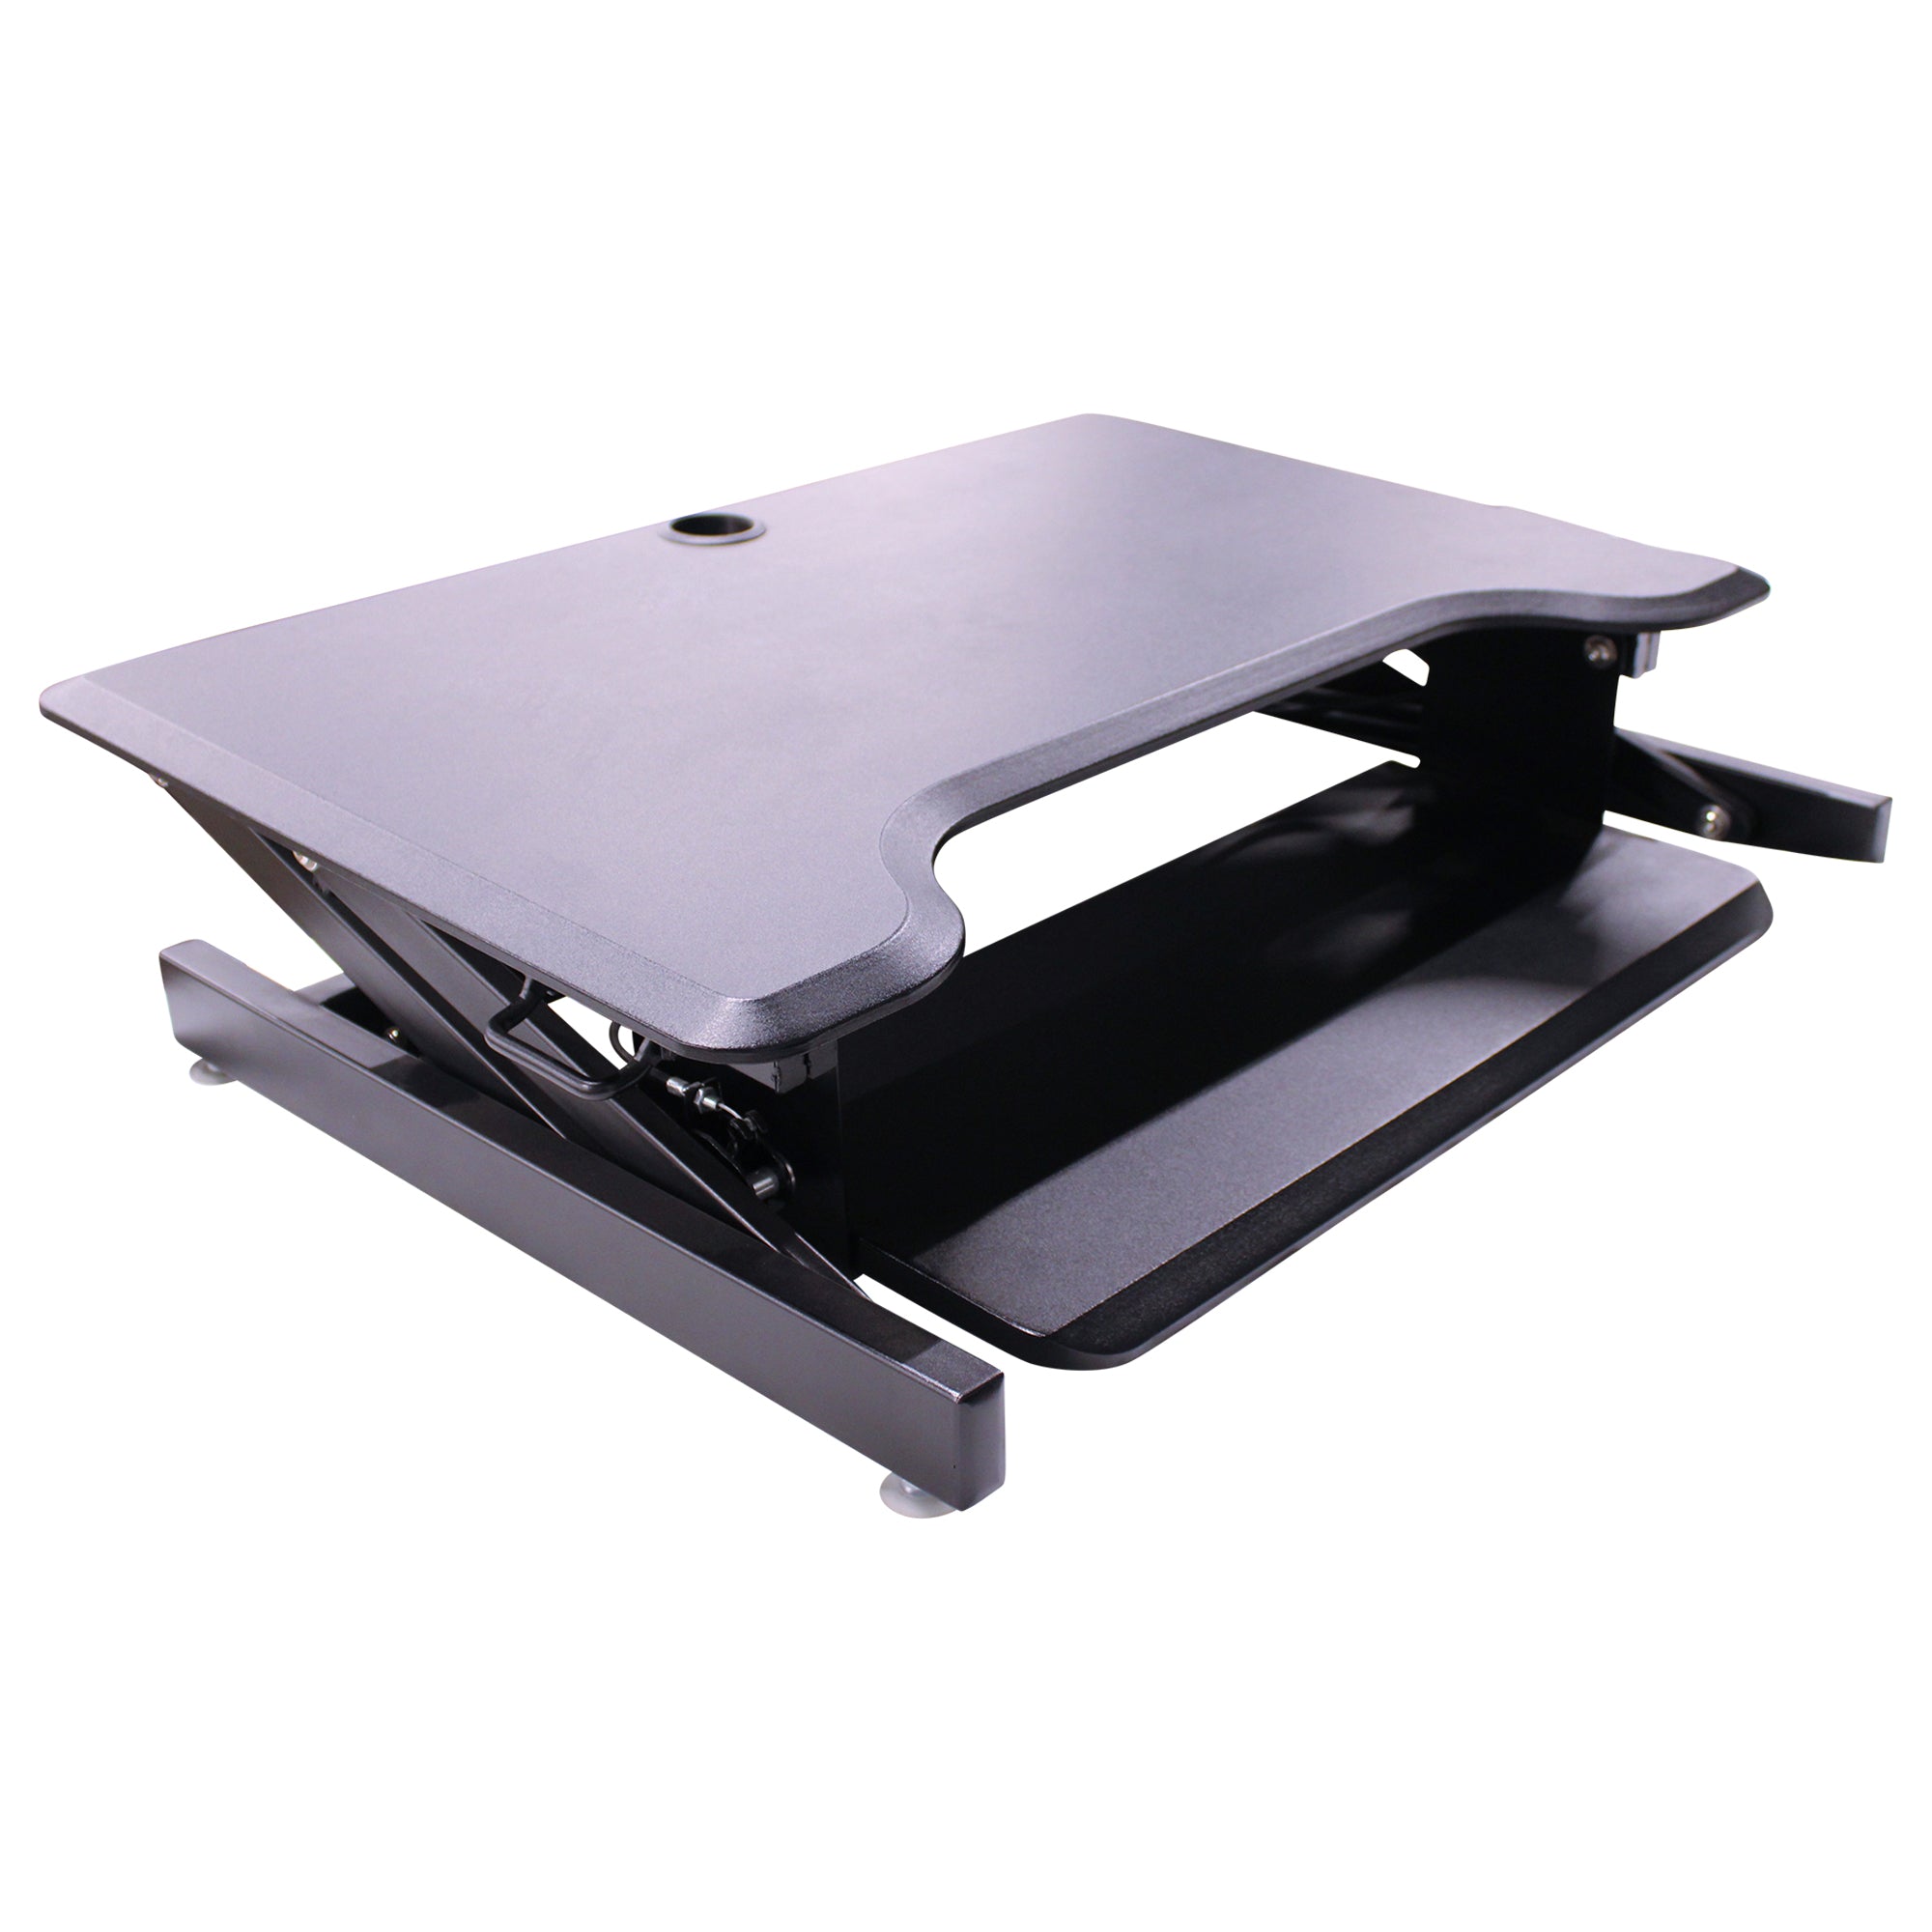 Height Adjustable Desk Mount, Black - Preowned